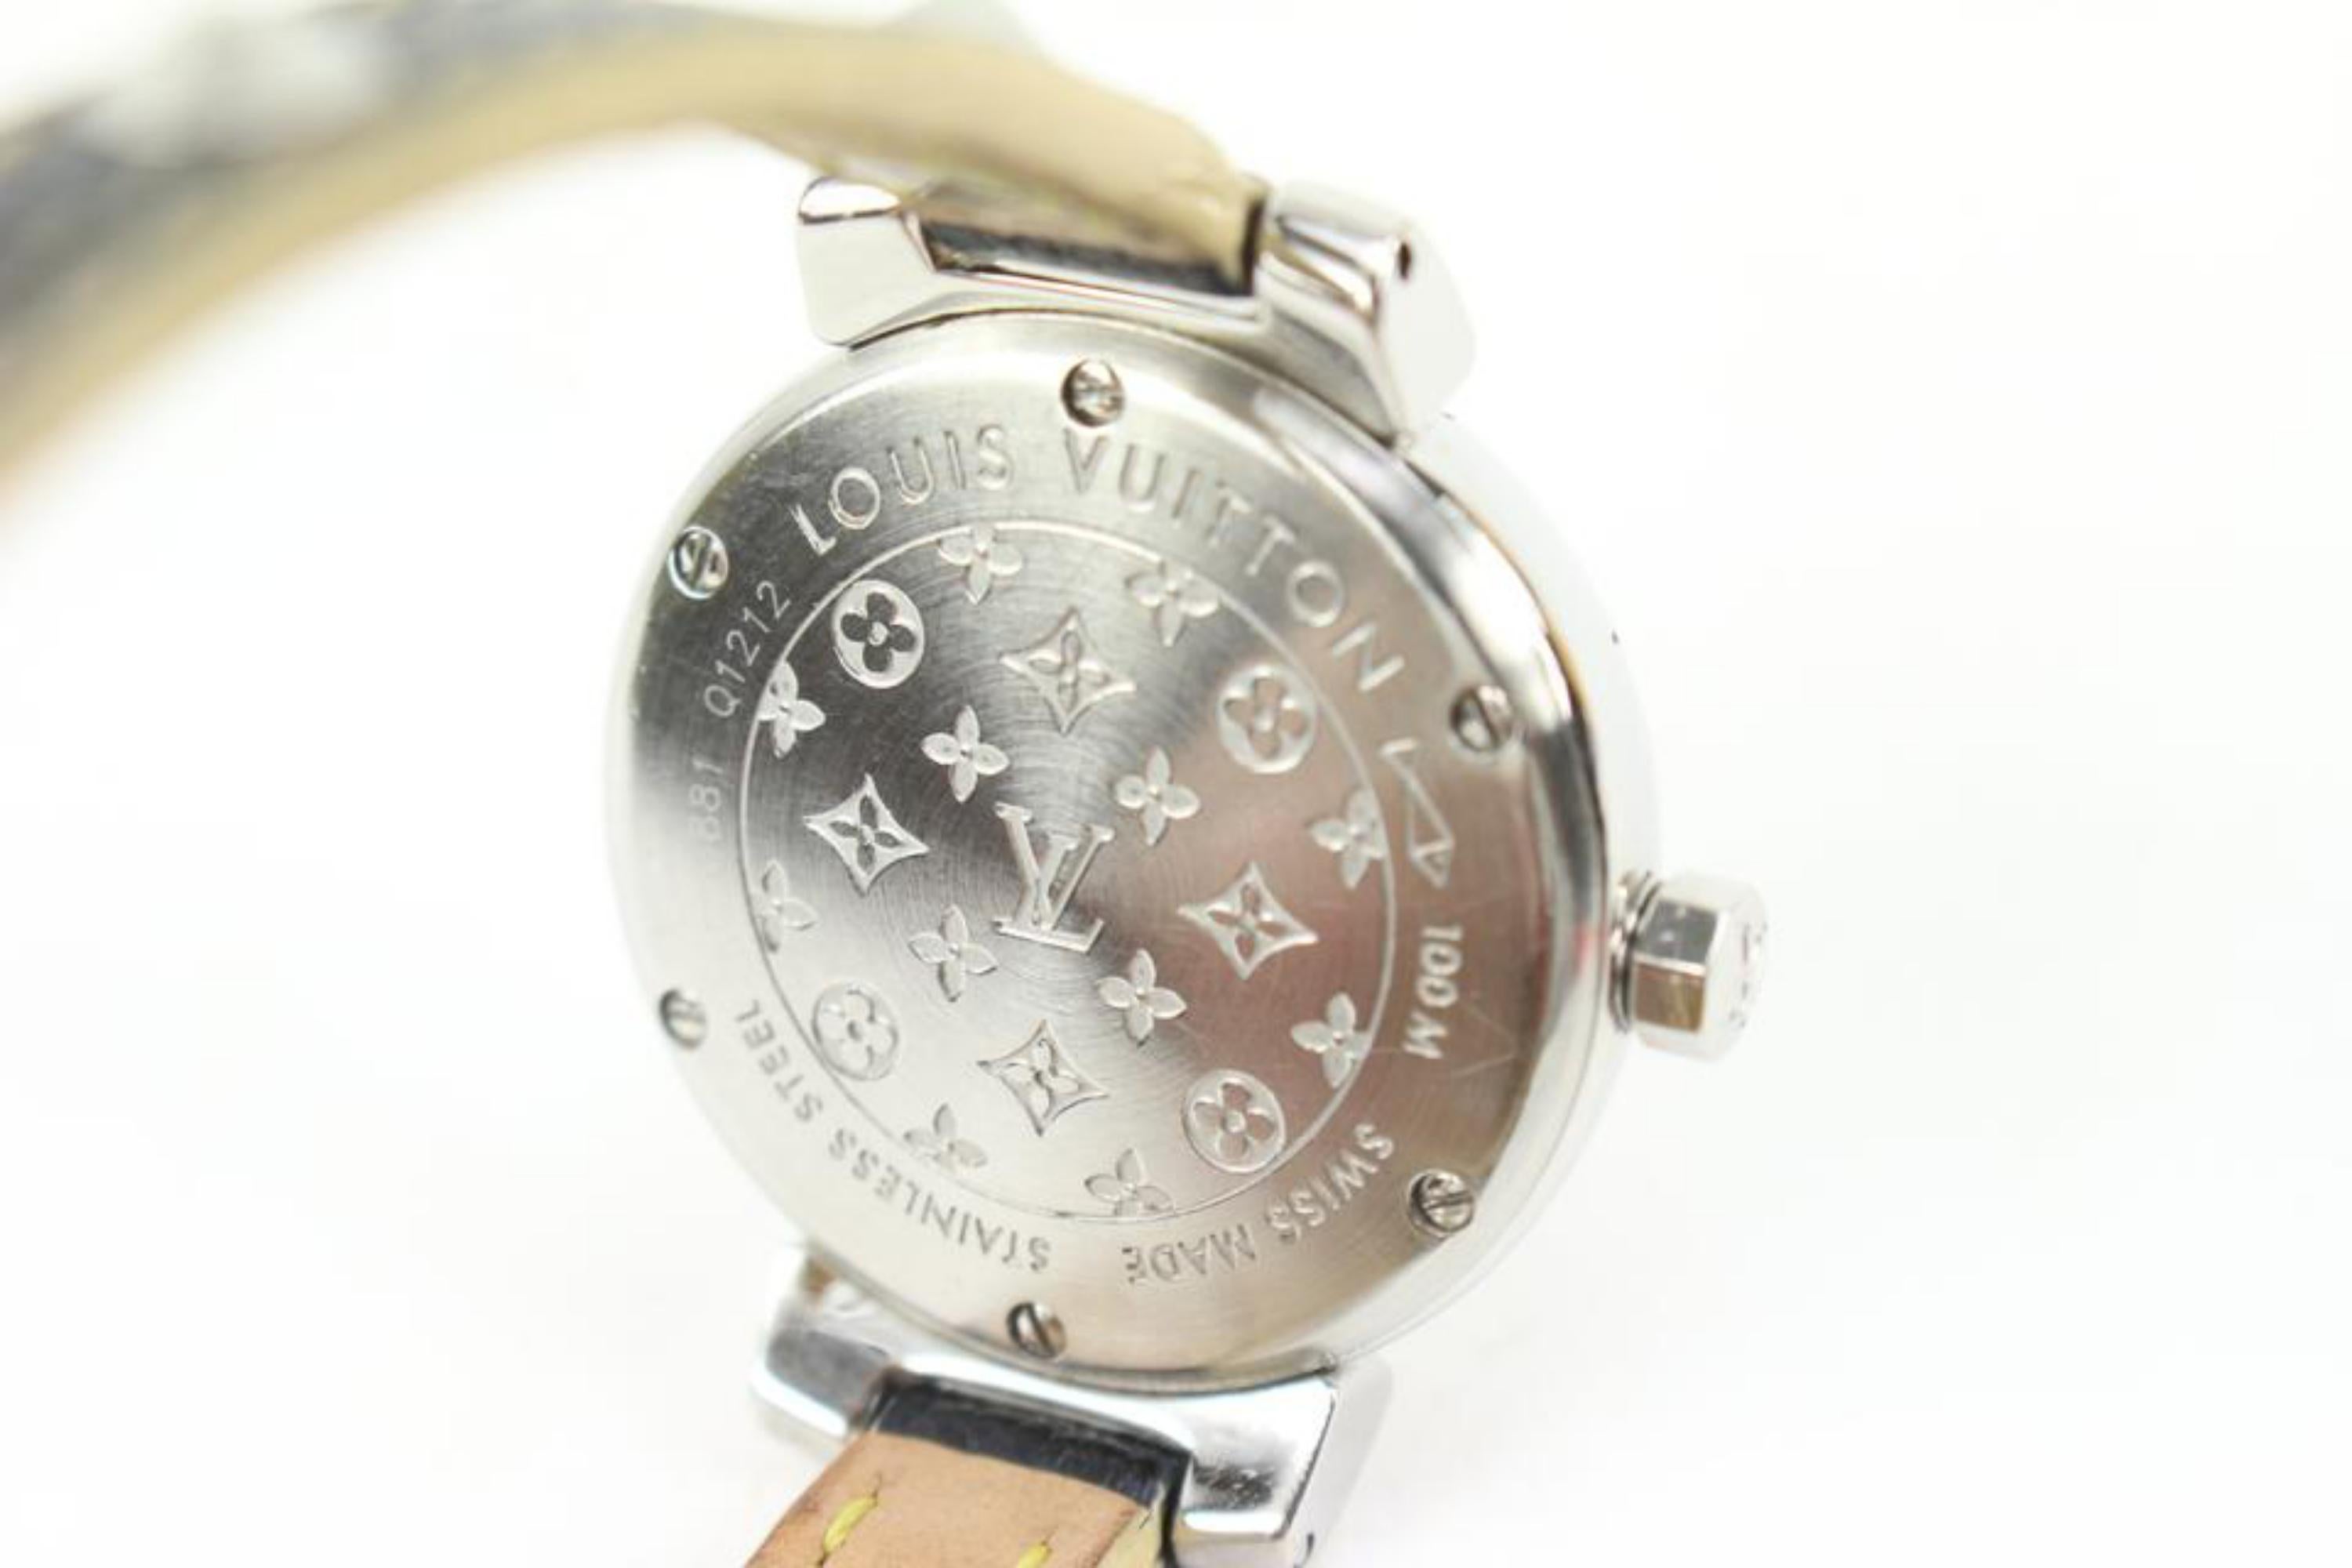 Louis Vuitton Triple Coiled Q1212 Tambour Watch 28mm Quartz 25lv37s
Date Code/Serial Number: RC6881 01212
Measurements: Length:  21.5